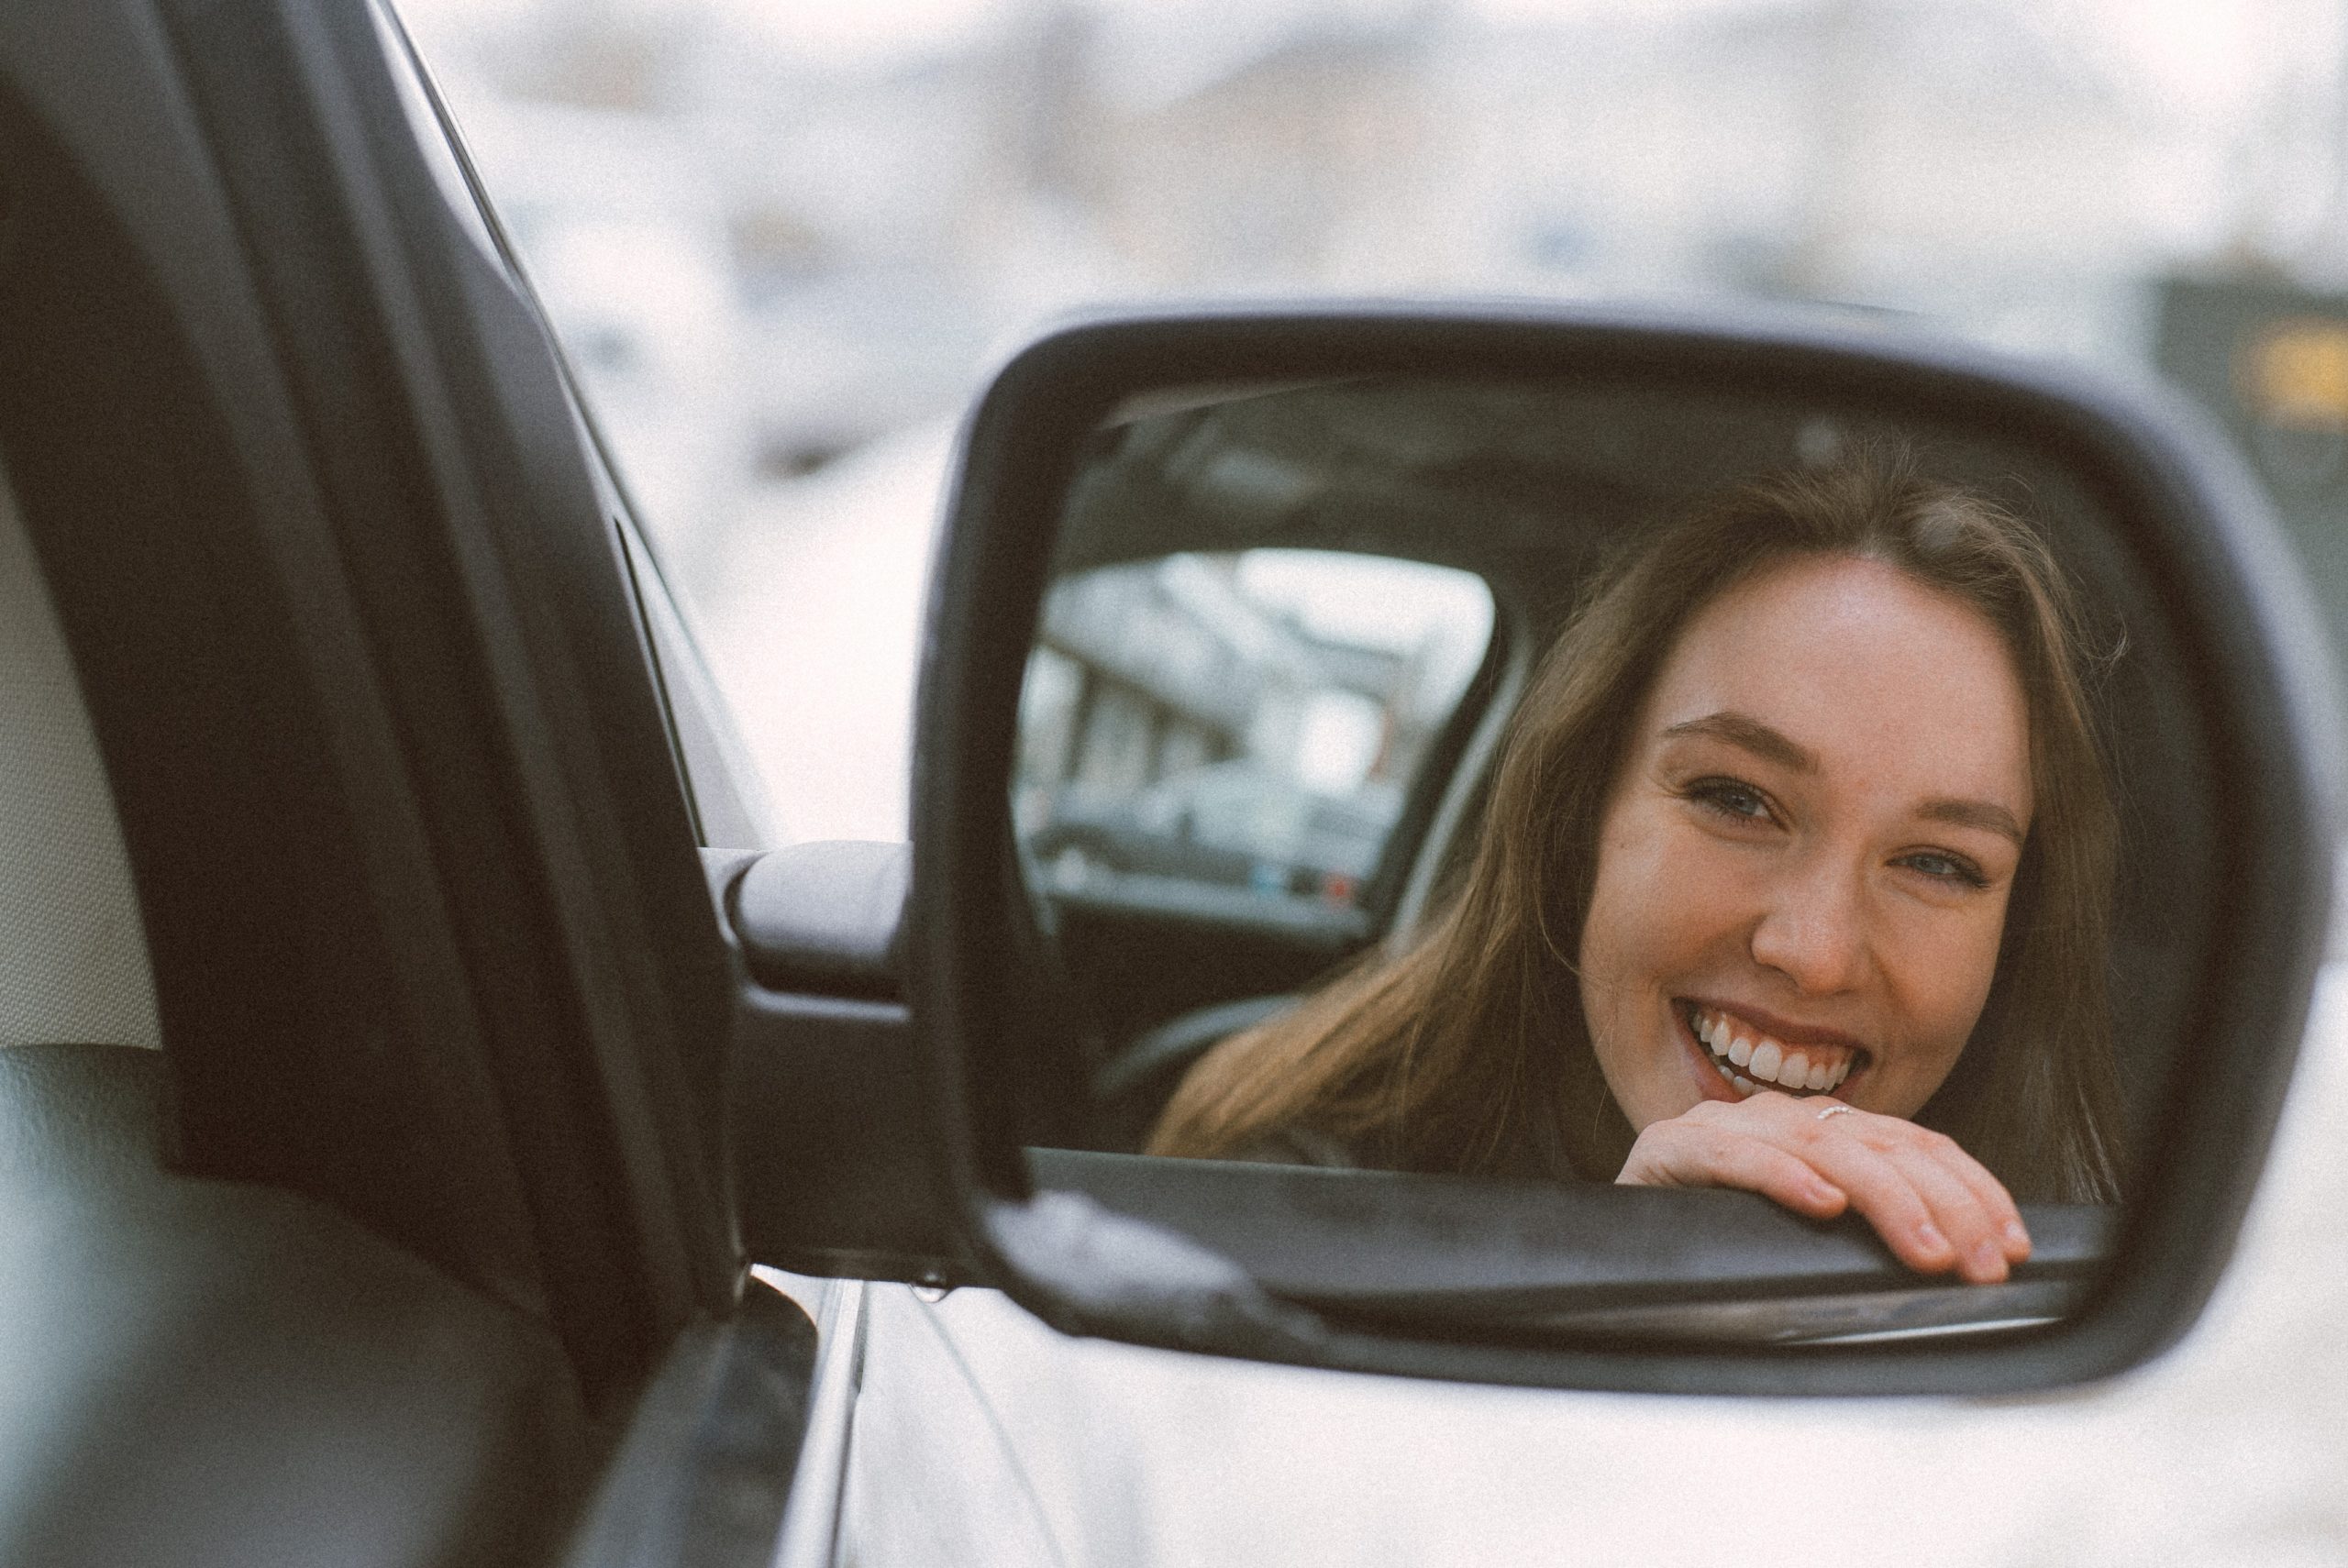 buy a car image - women smiling in car mirror